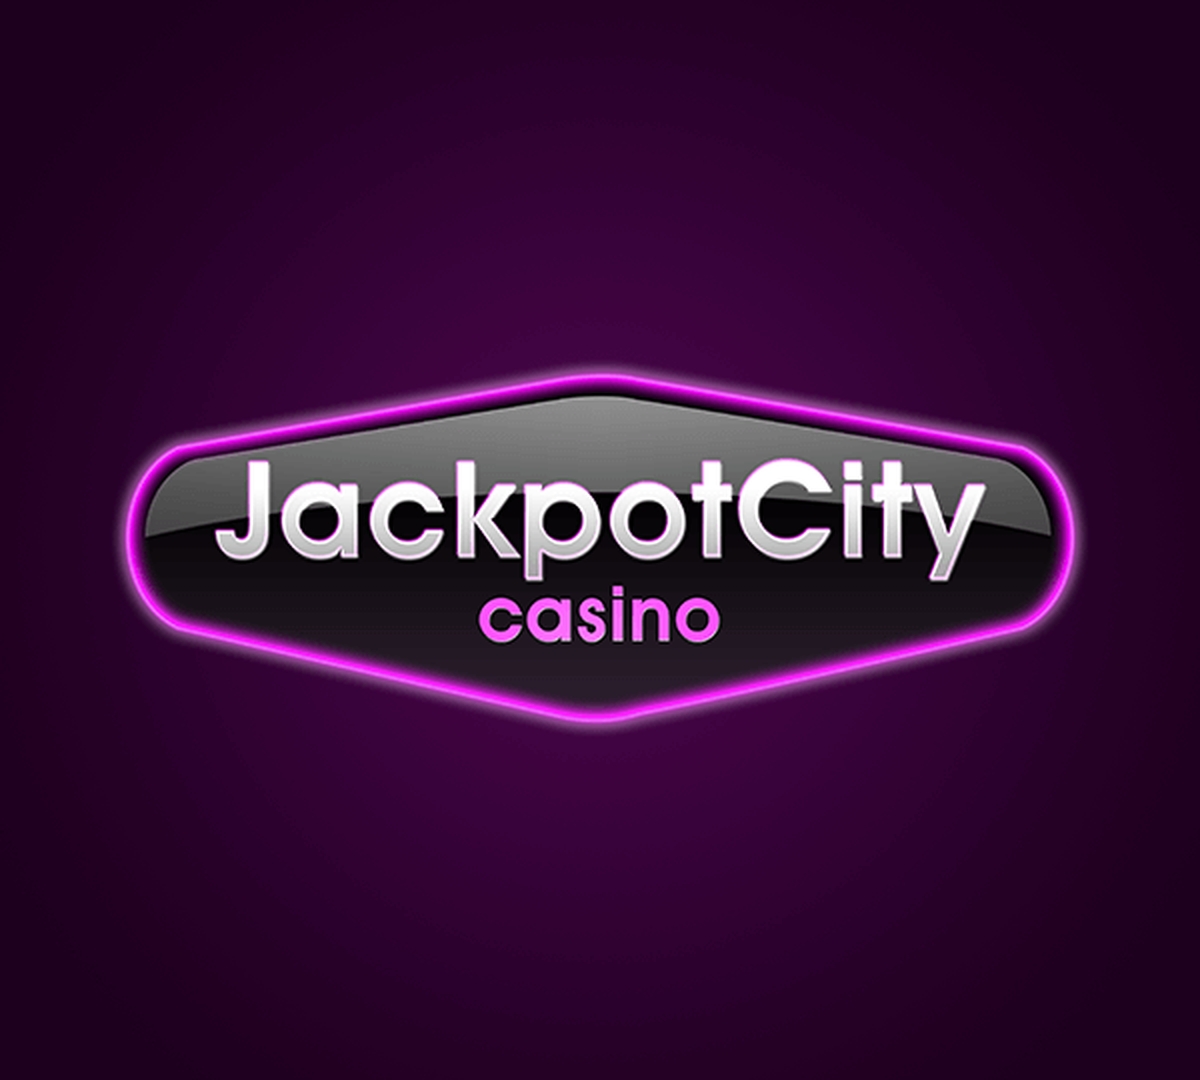 Jackpot City demo